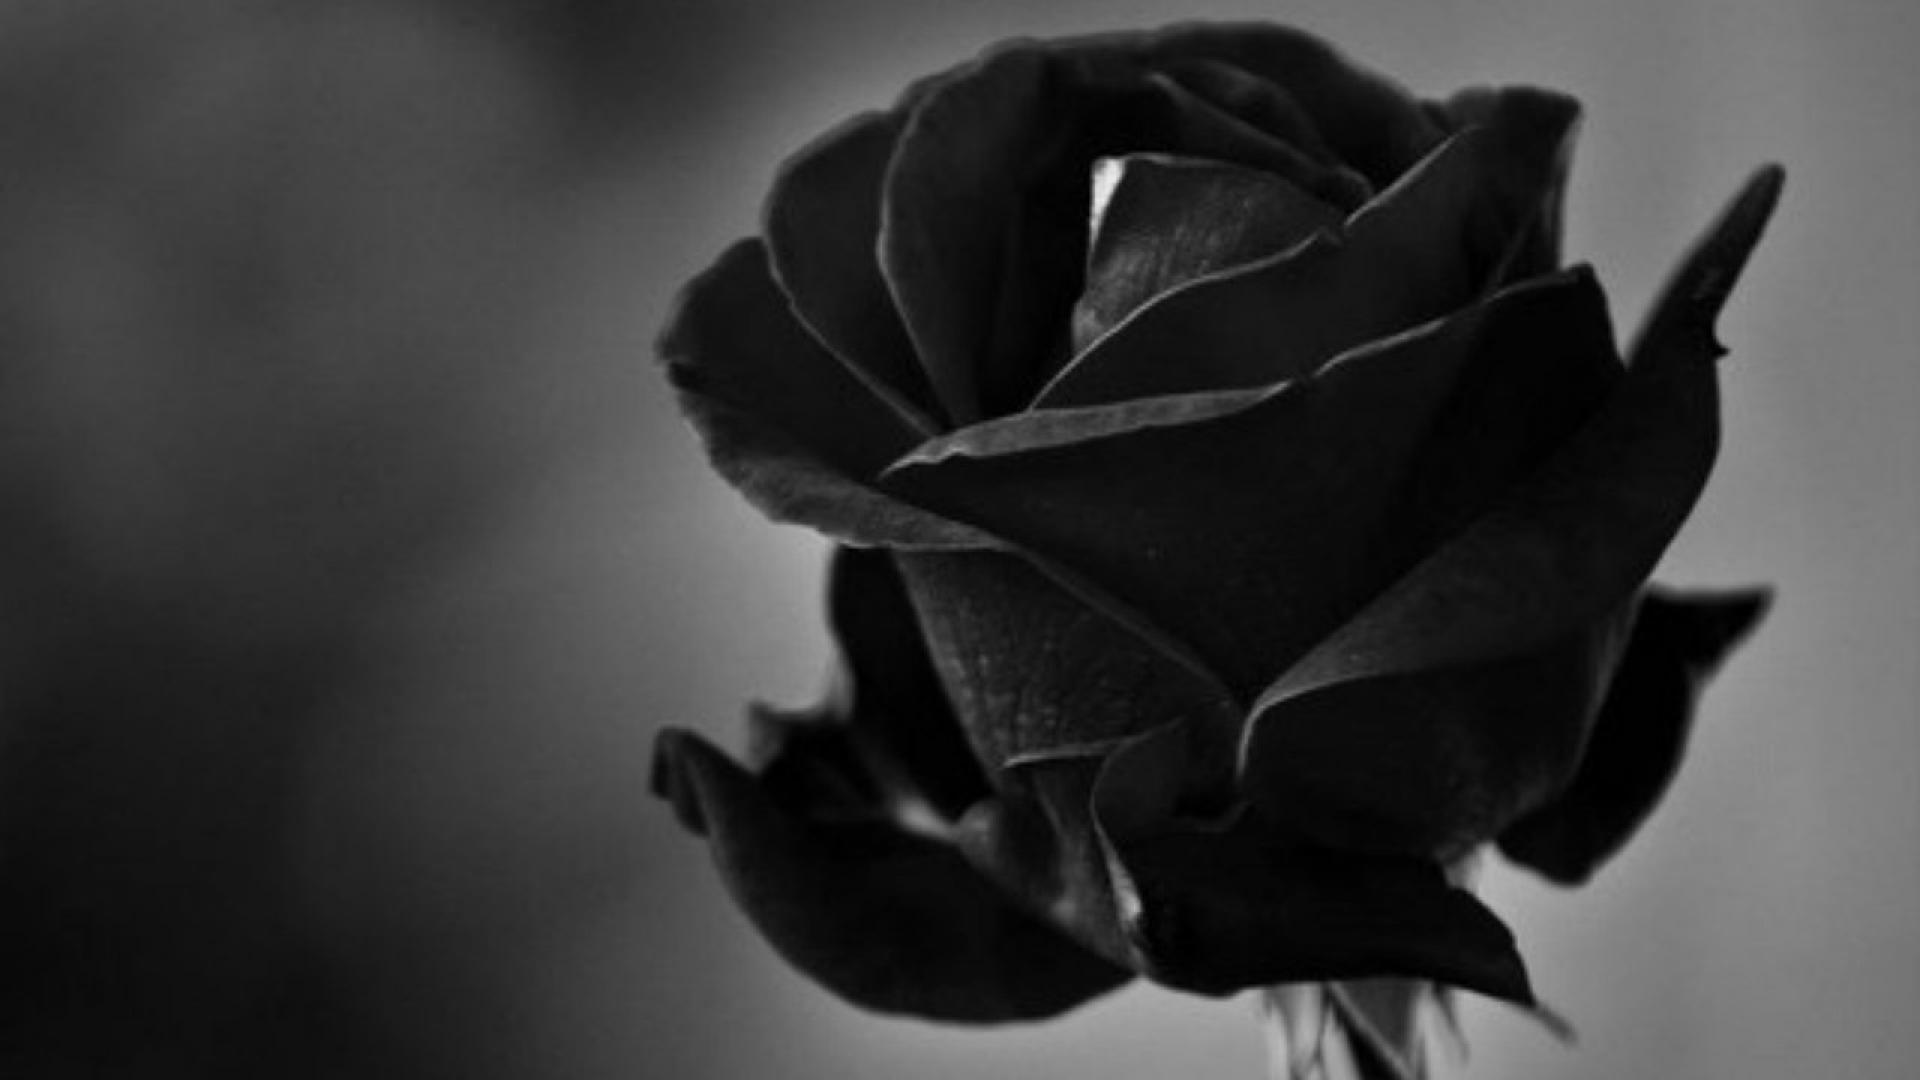 Black Rose Image